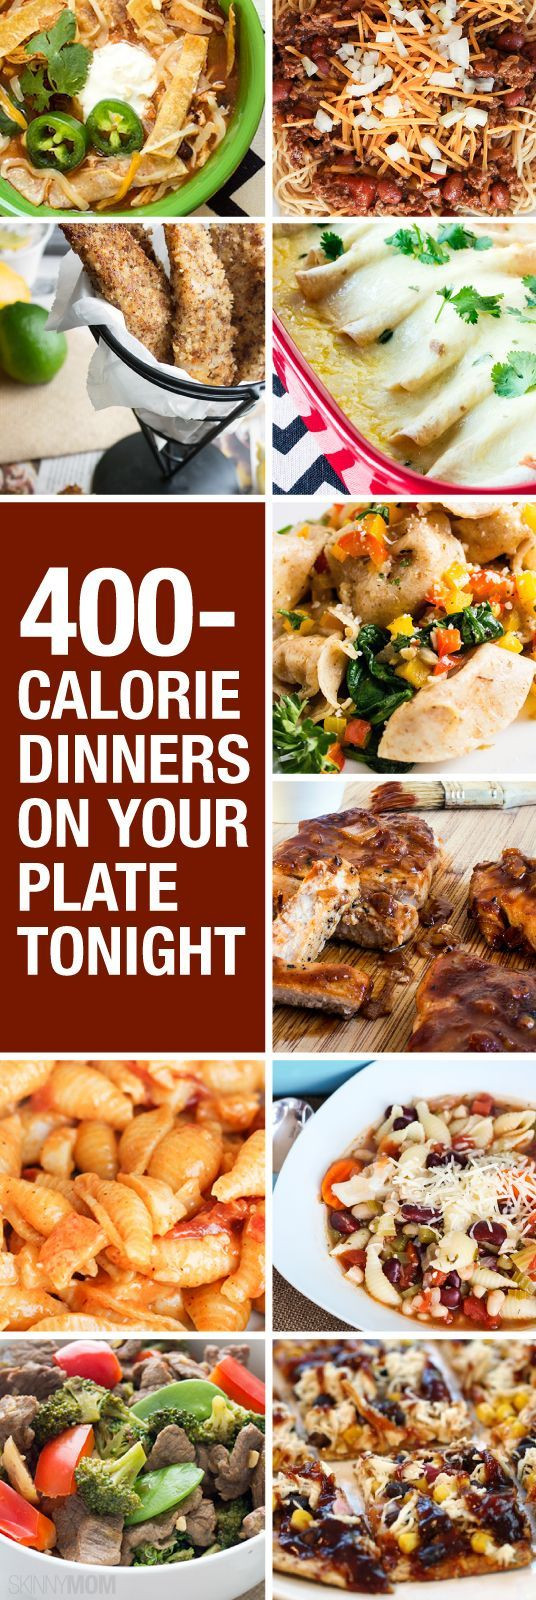 600 Calorie Dinner
 Best 25 600 calorie meals ideas on Pinterest